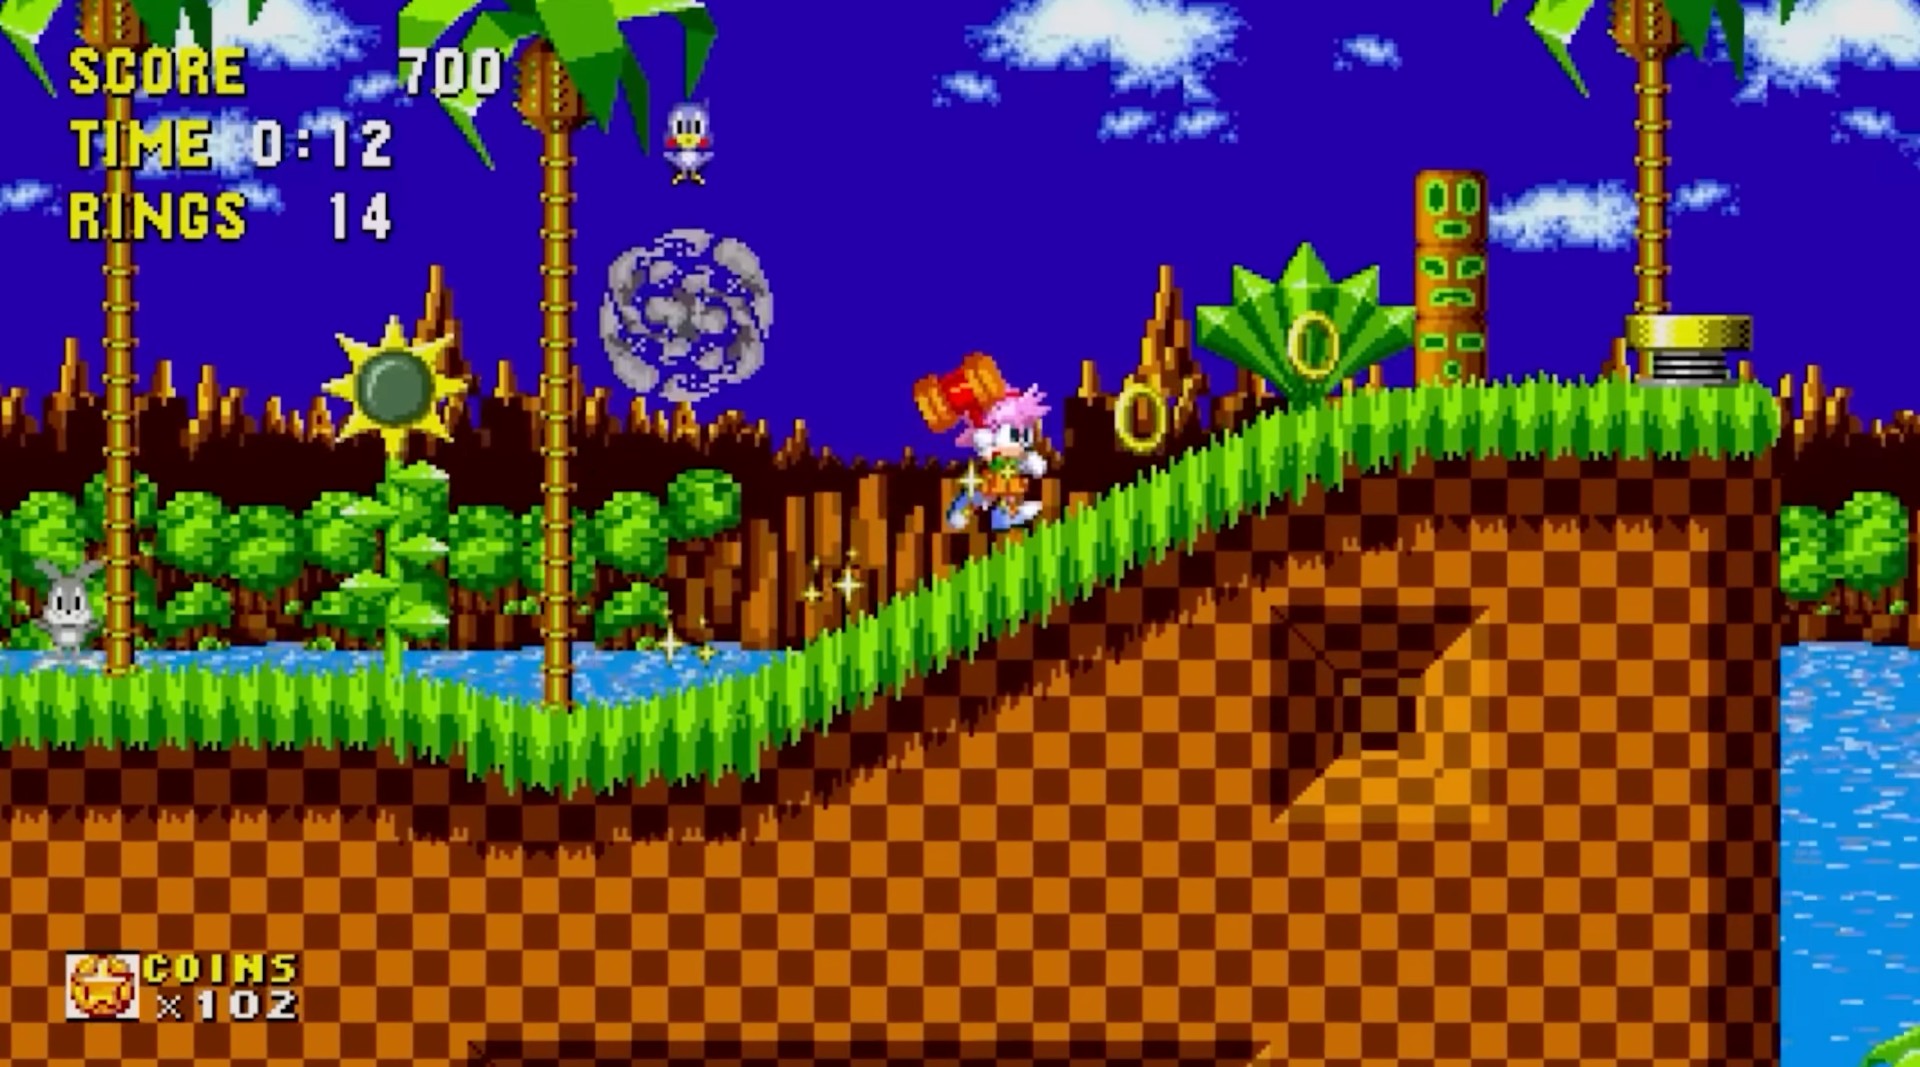 Review  Sonic Origins - NintendoBoy